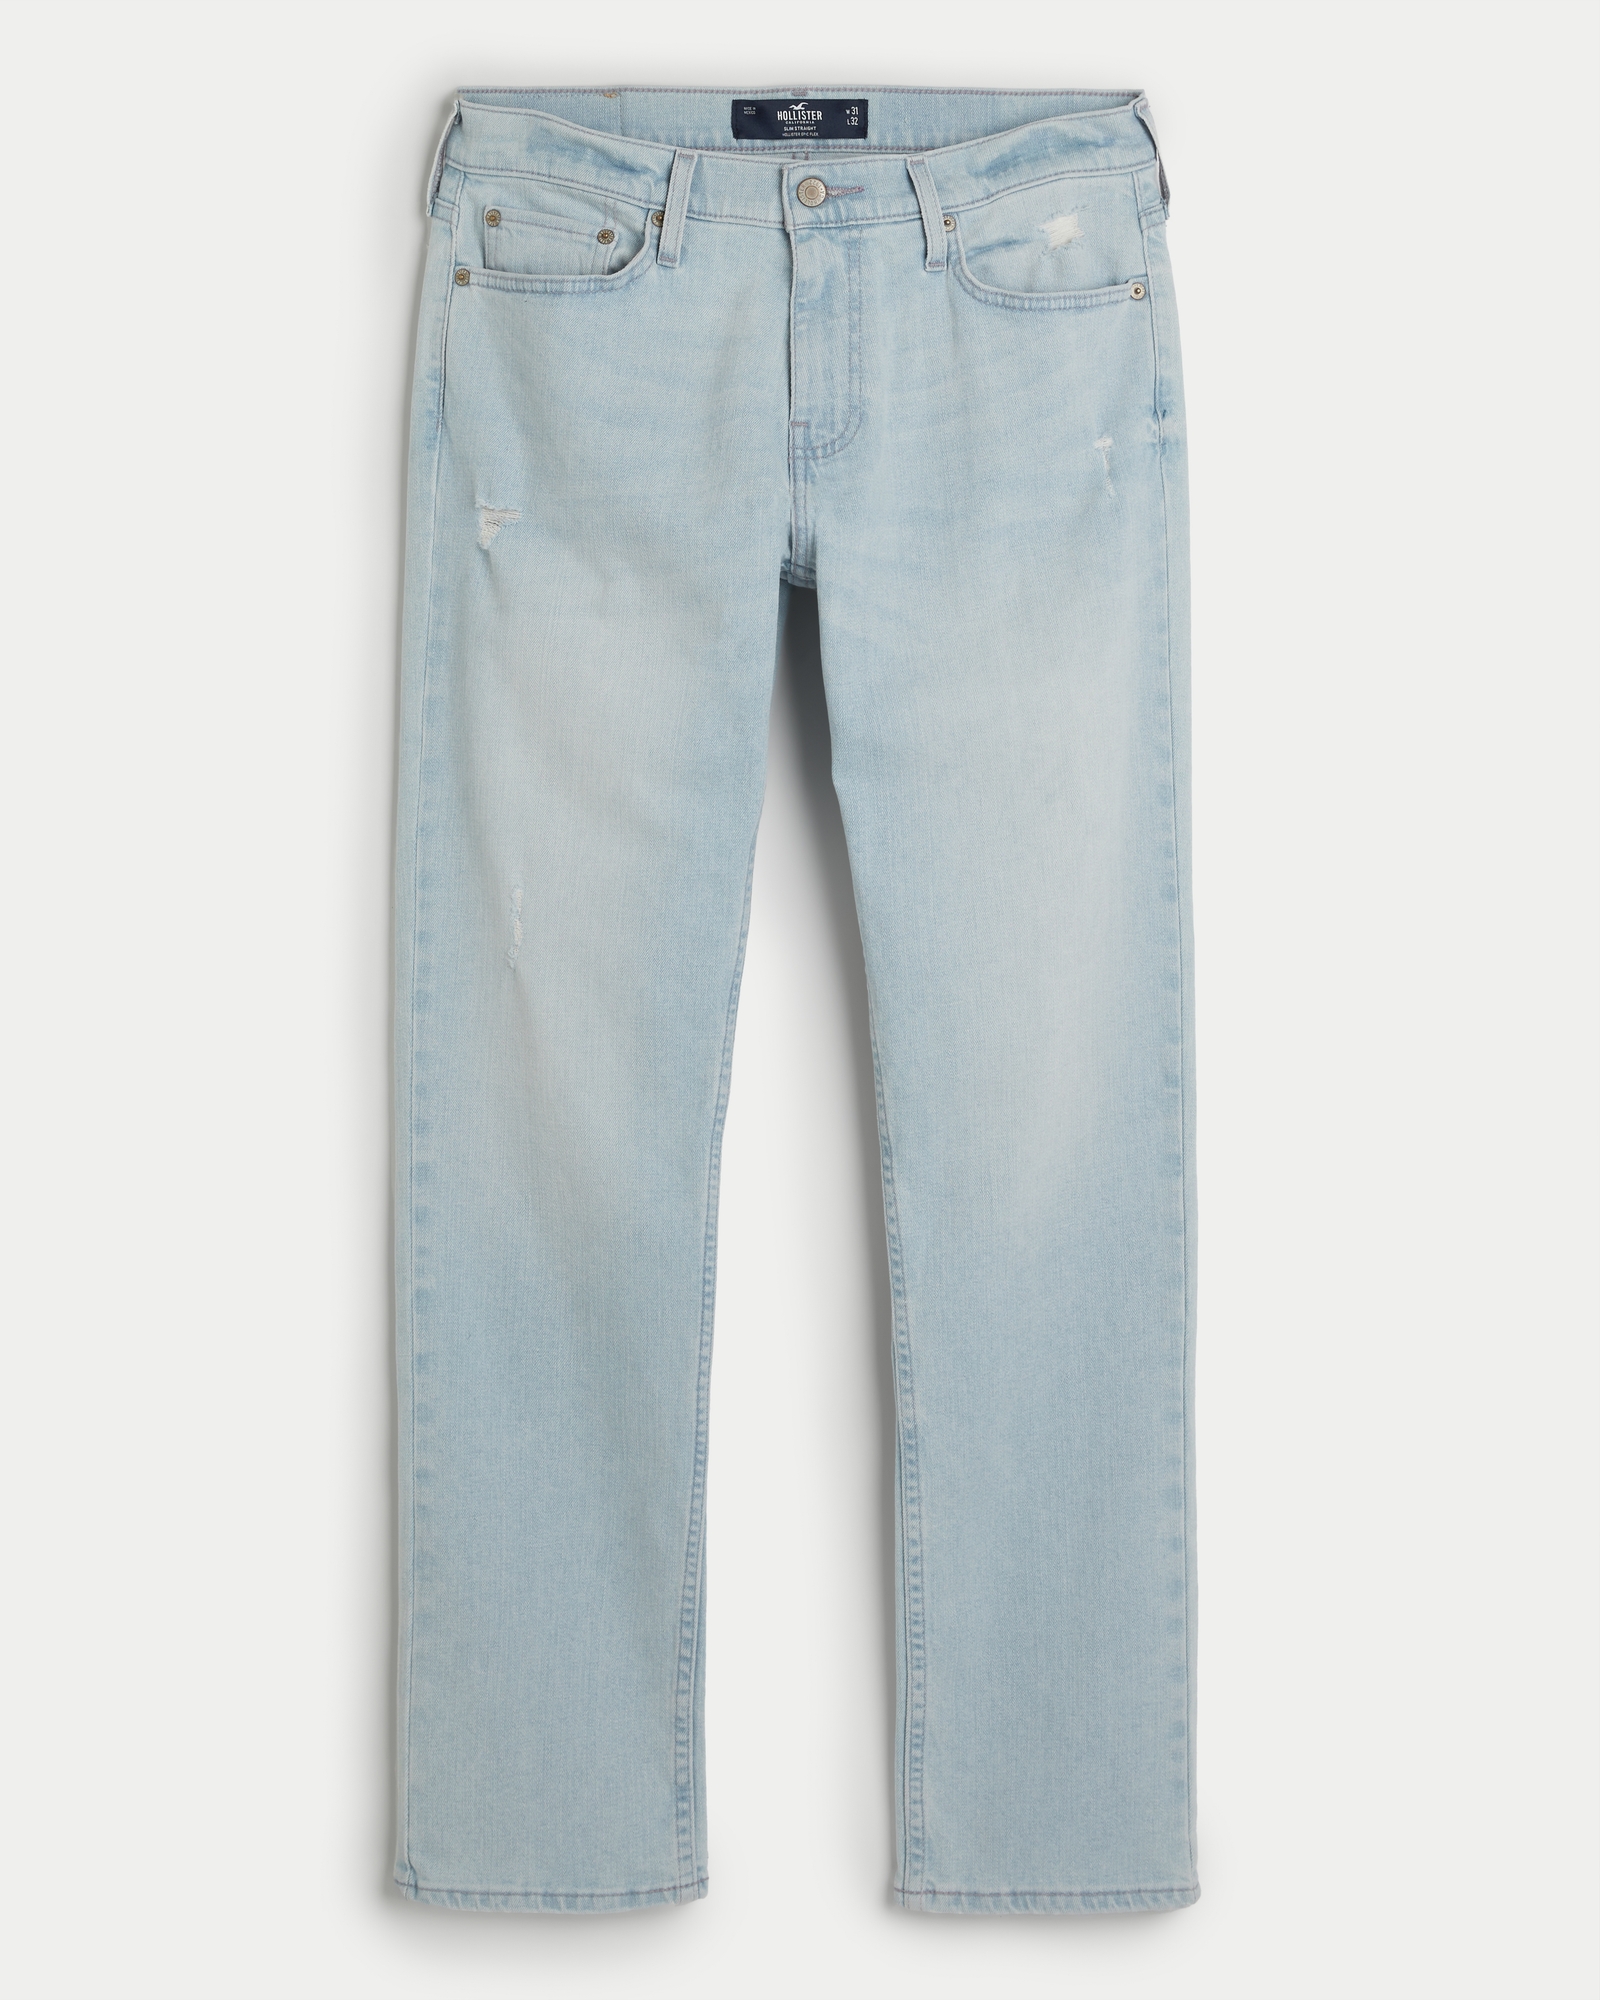 Hollister Jeans for Men, Online Sale up to 59% off